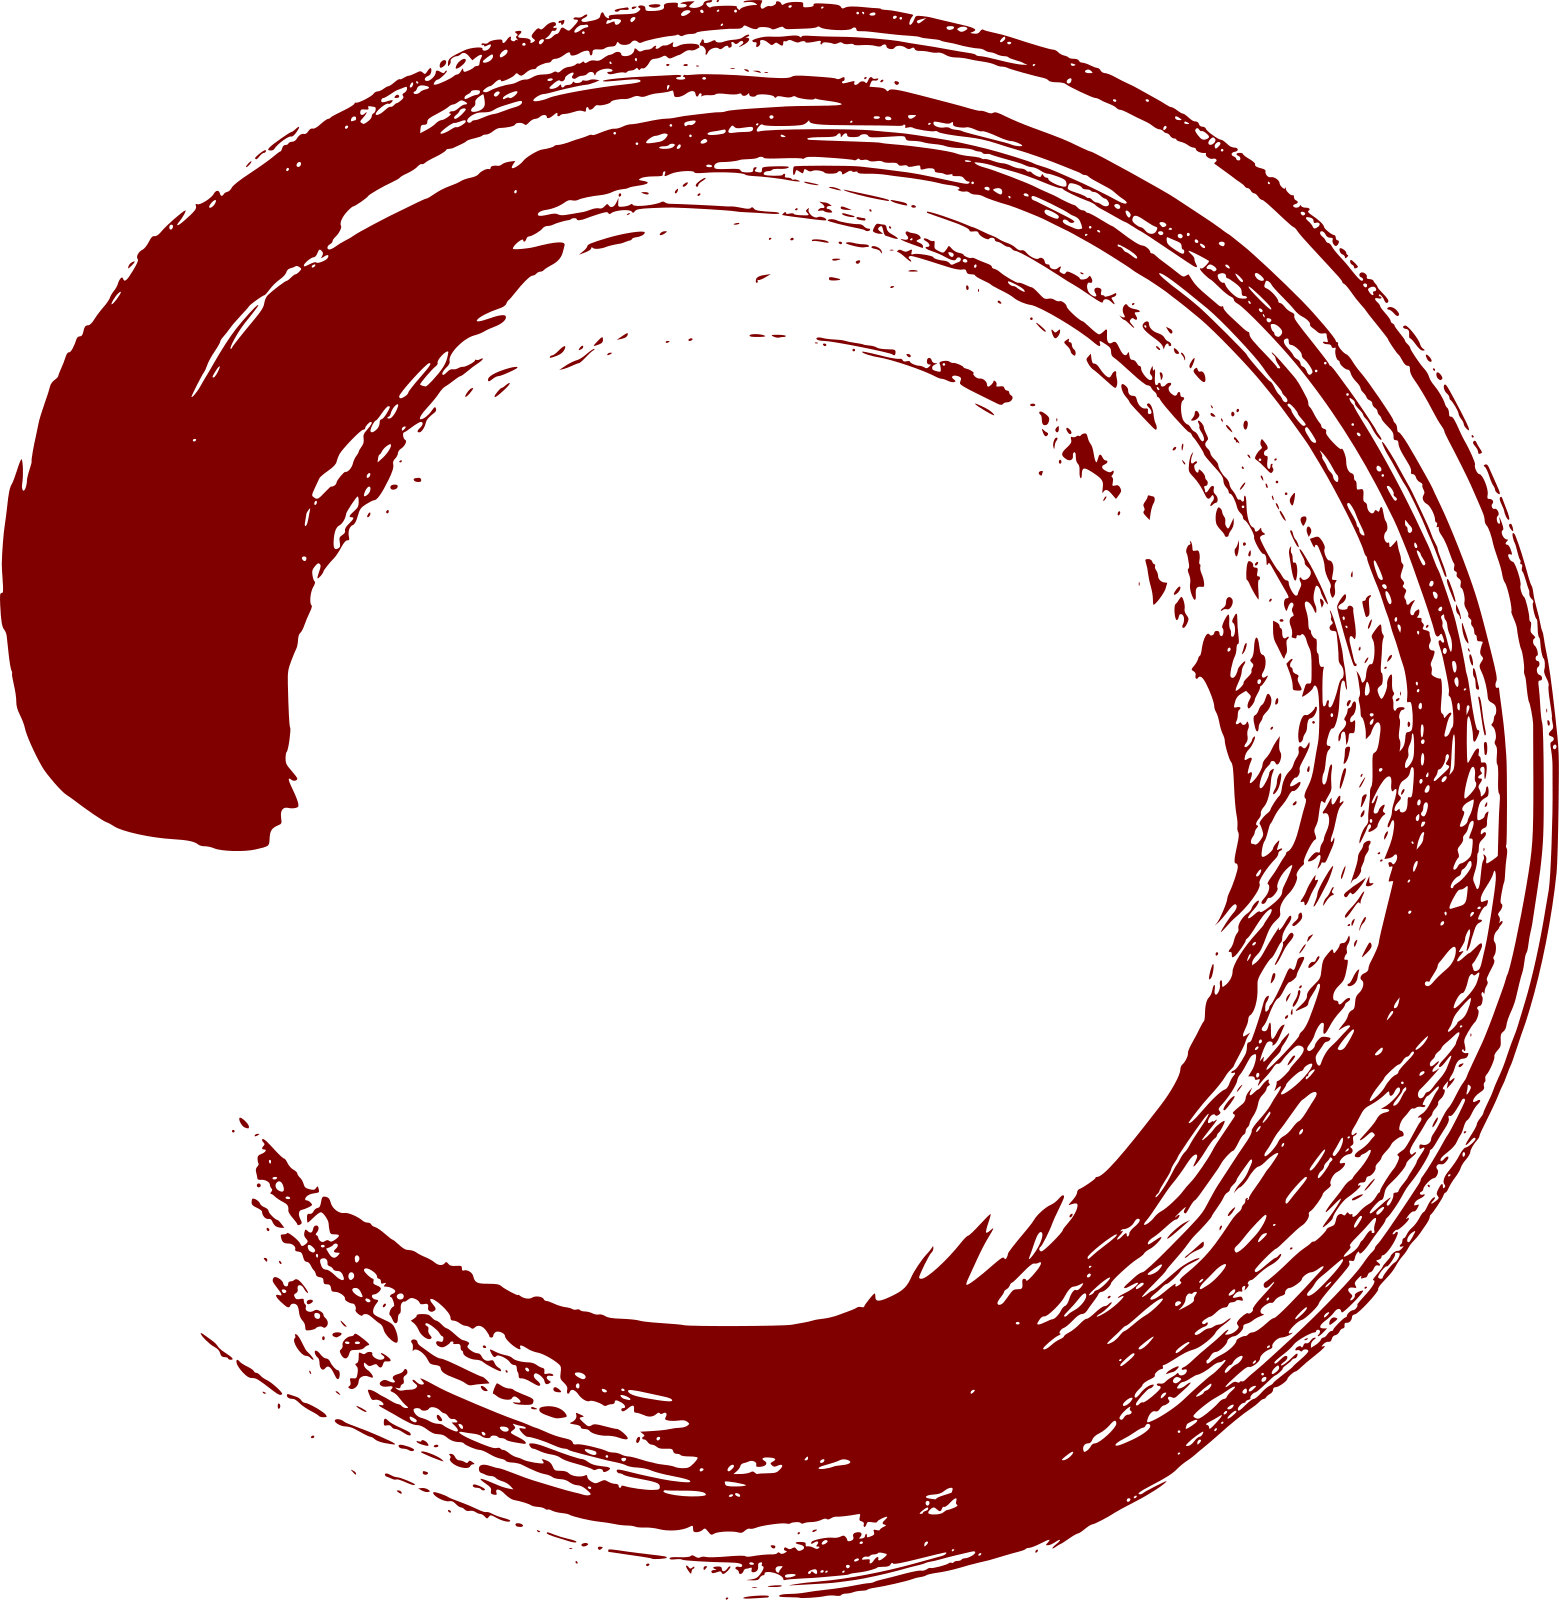 Zen Circle